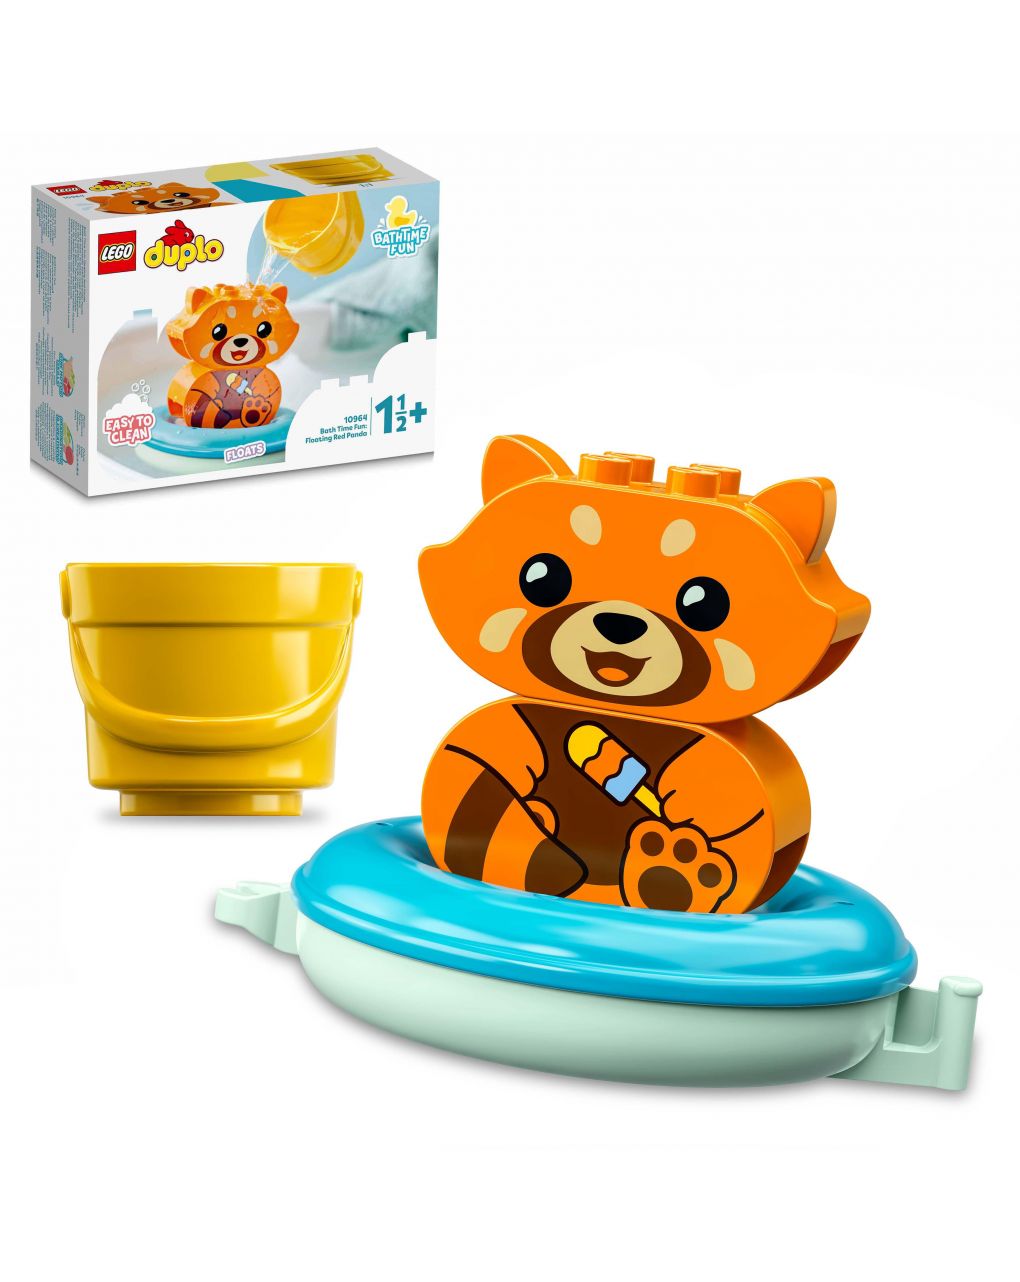 Duplo - hora do banho: floating red panda - 10964 - LEGO Duplo